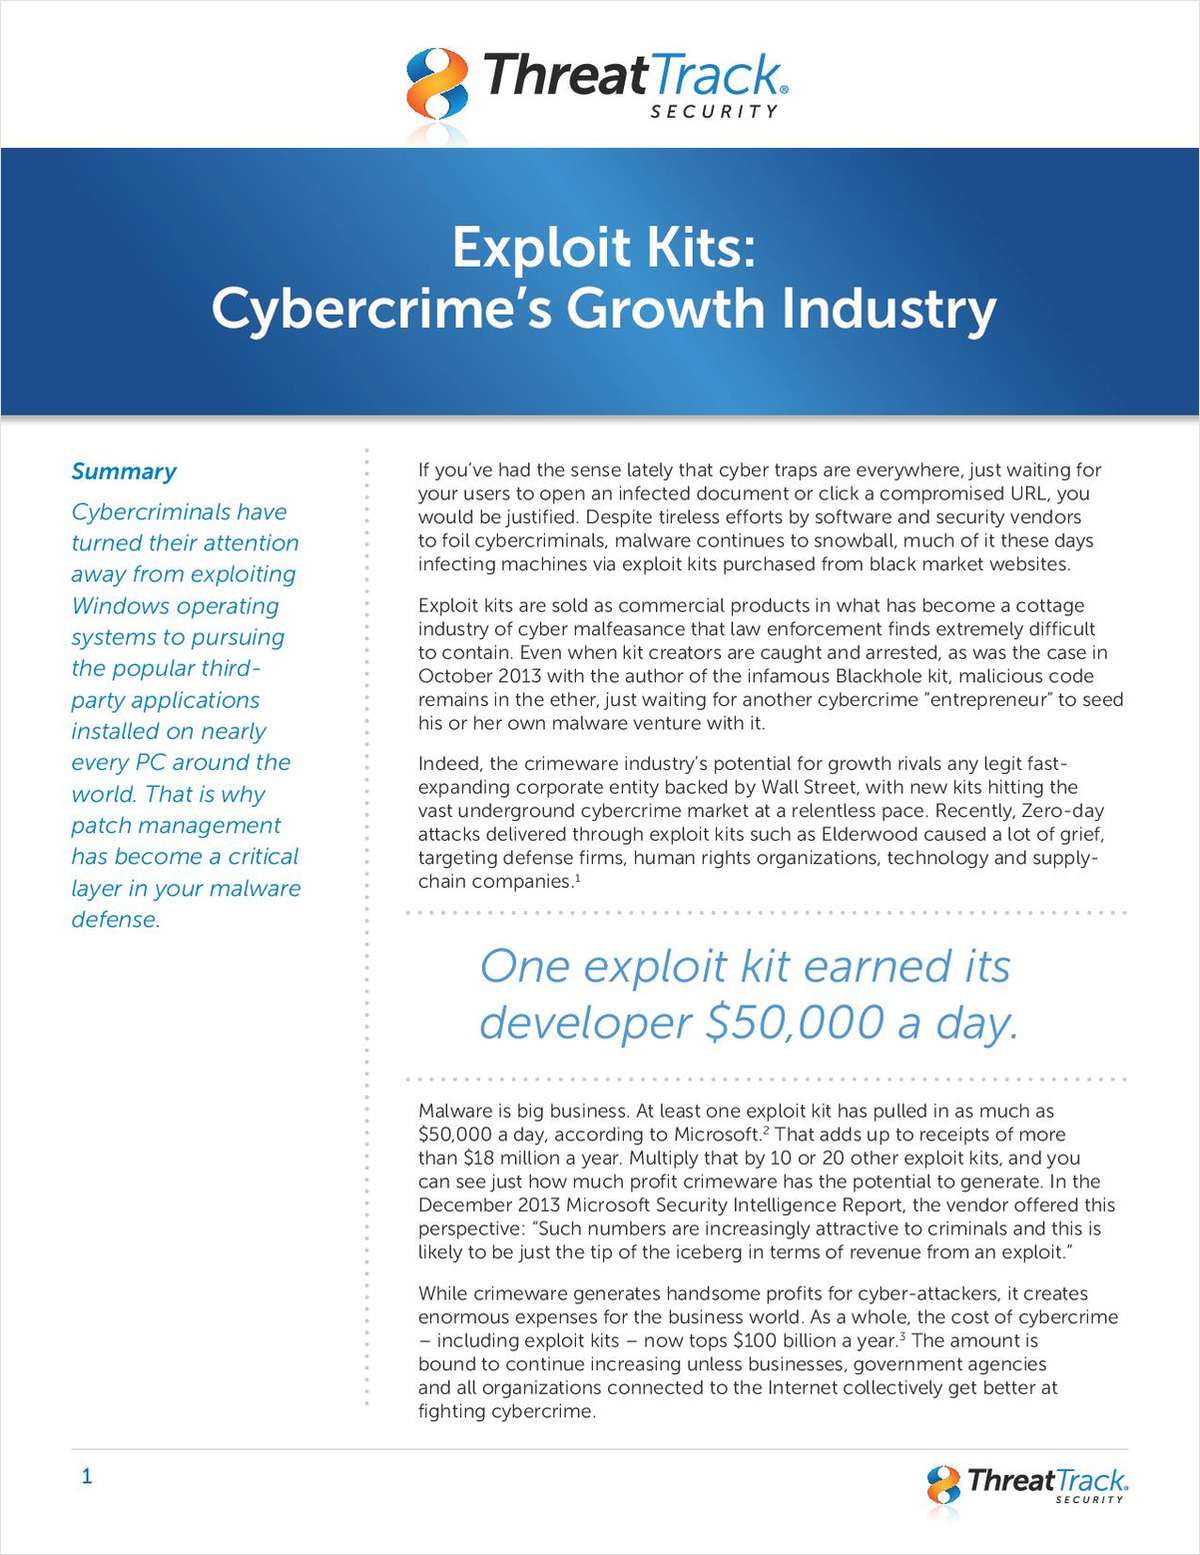 Exploit Kits: Cybercrime's Growth Industry